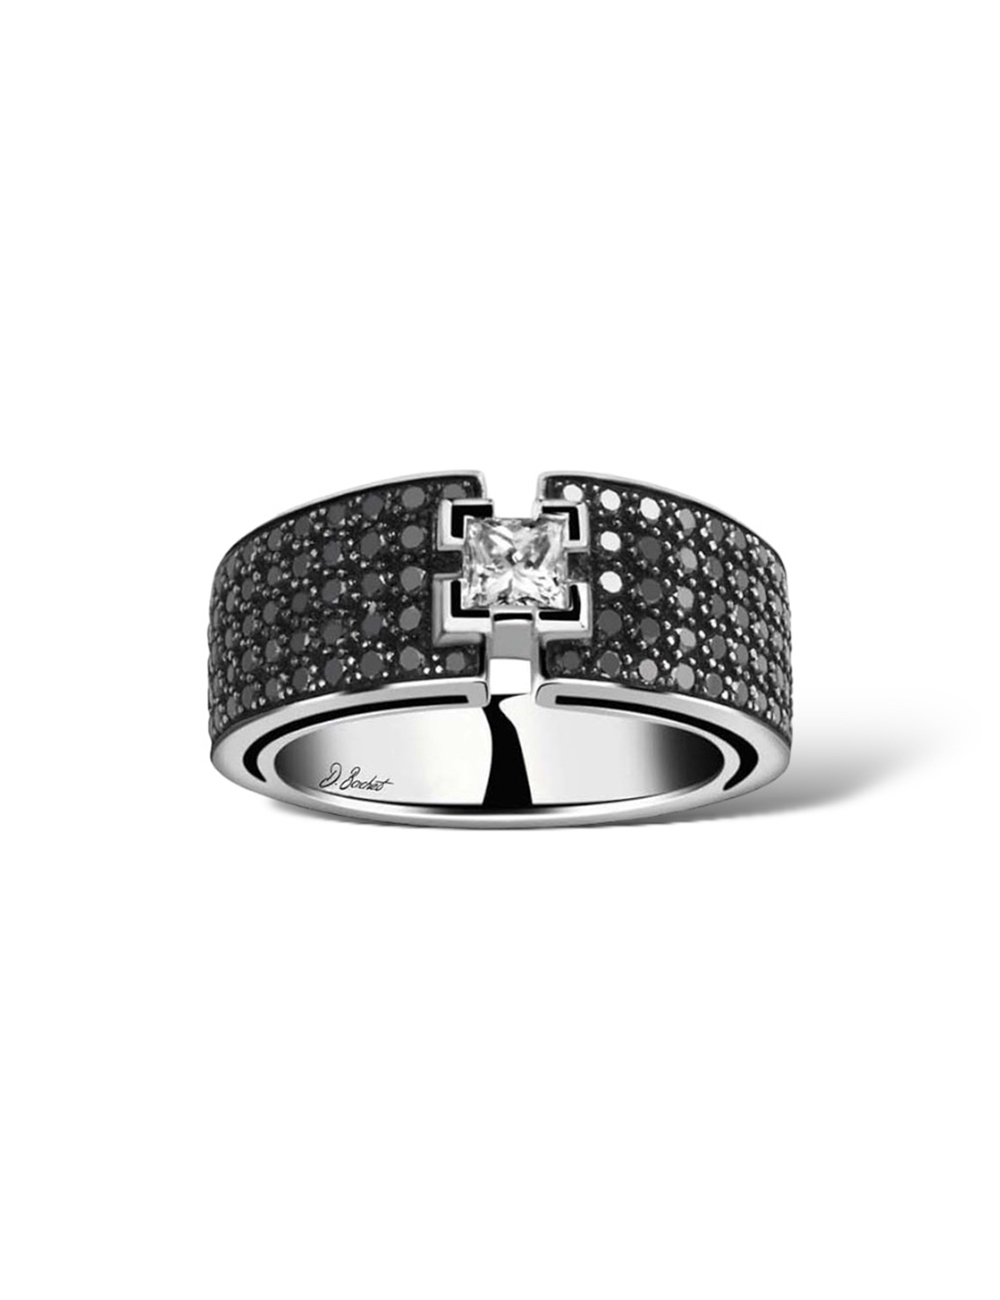 Princess cut 0.30 ct white diamond engagement ring with black diamond pavé setting.